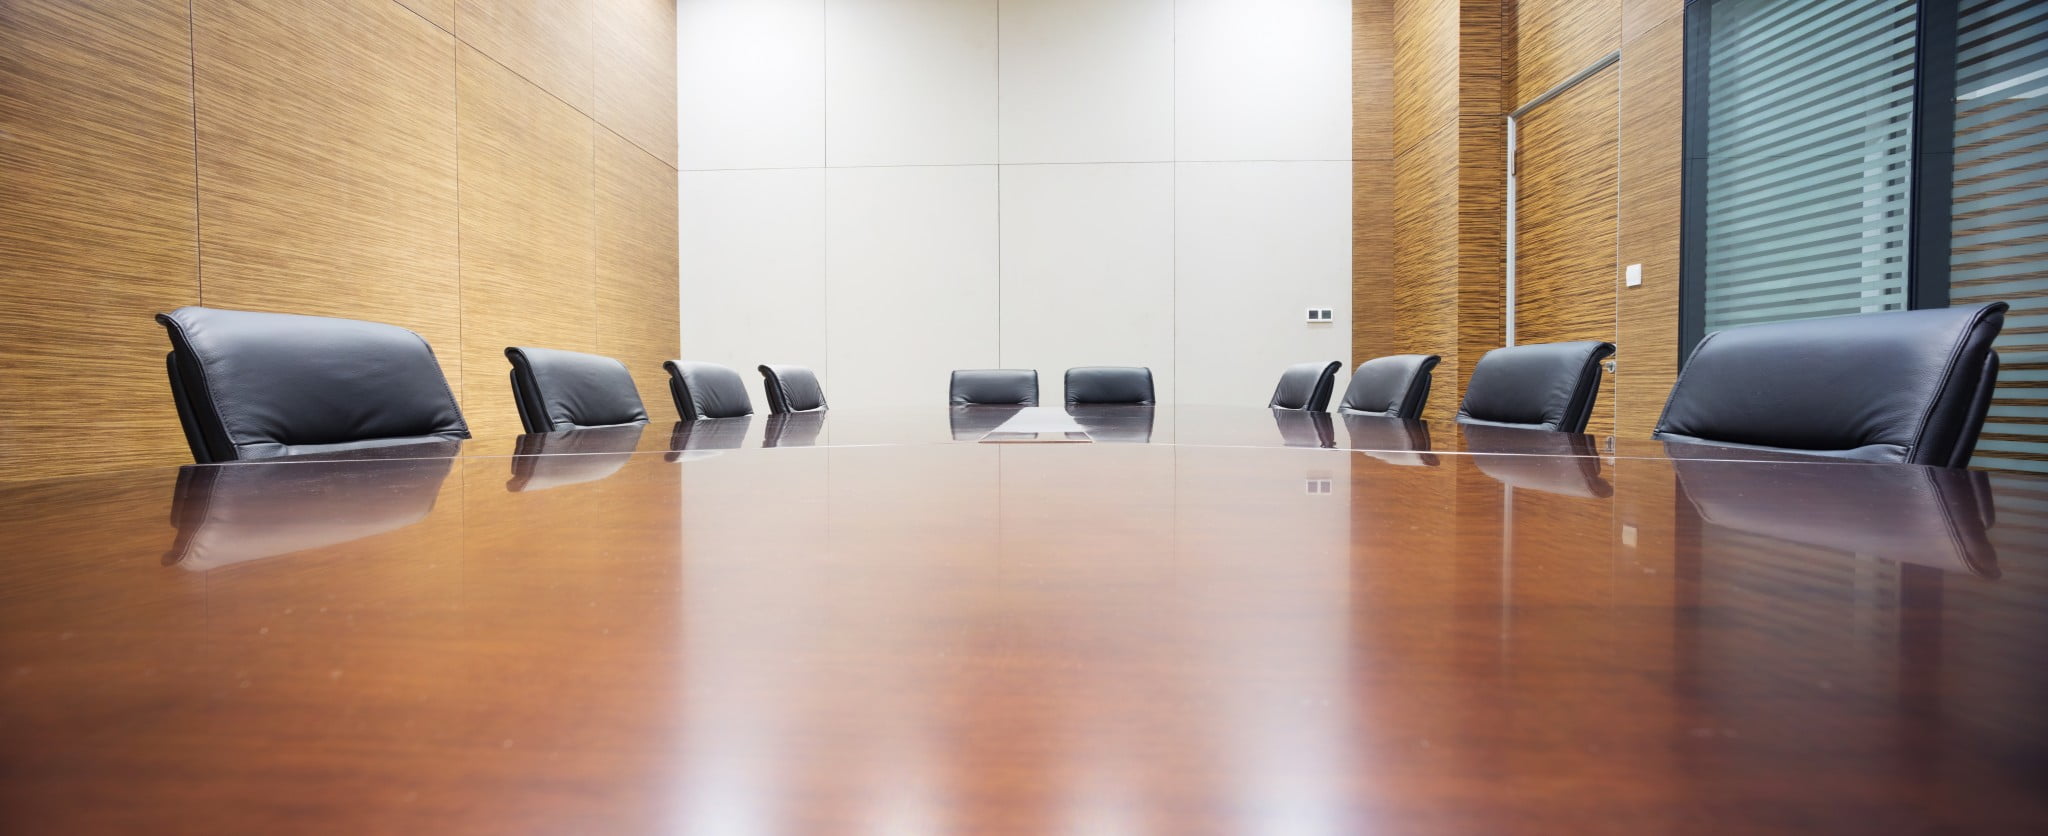 competency standards: meeting room